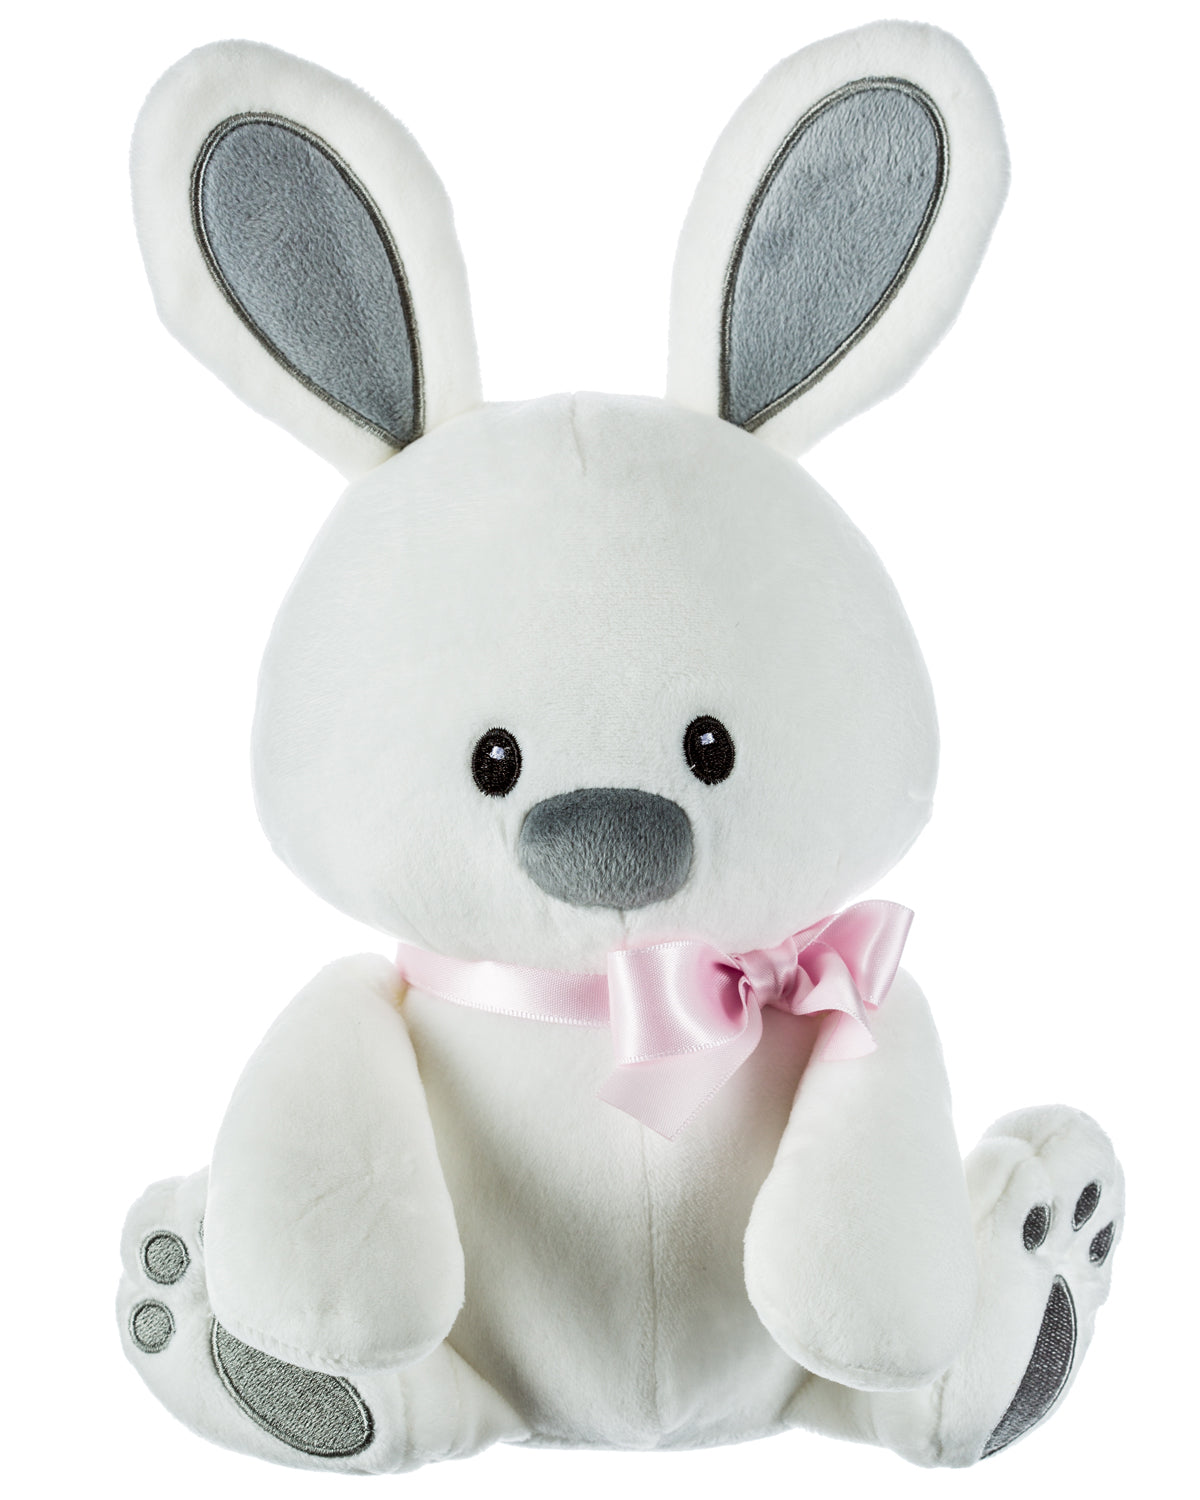 White Plush Bunny with Pink Ribbon